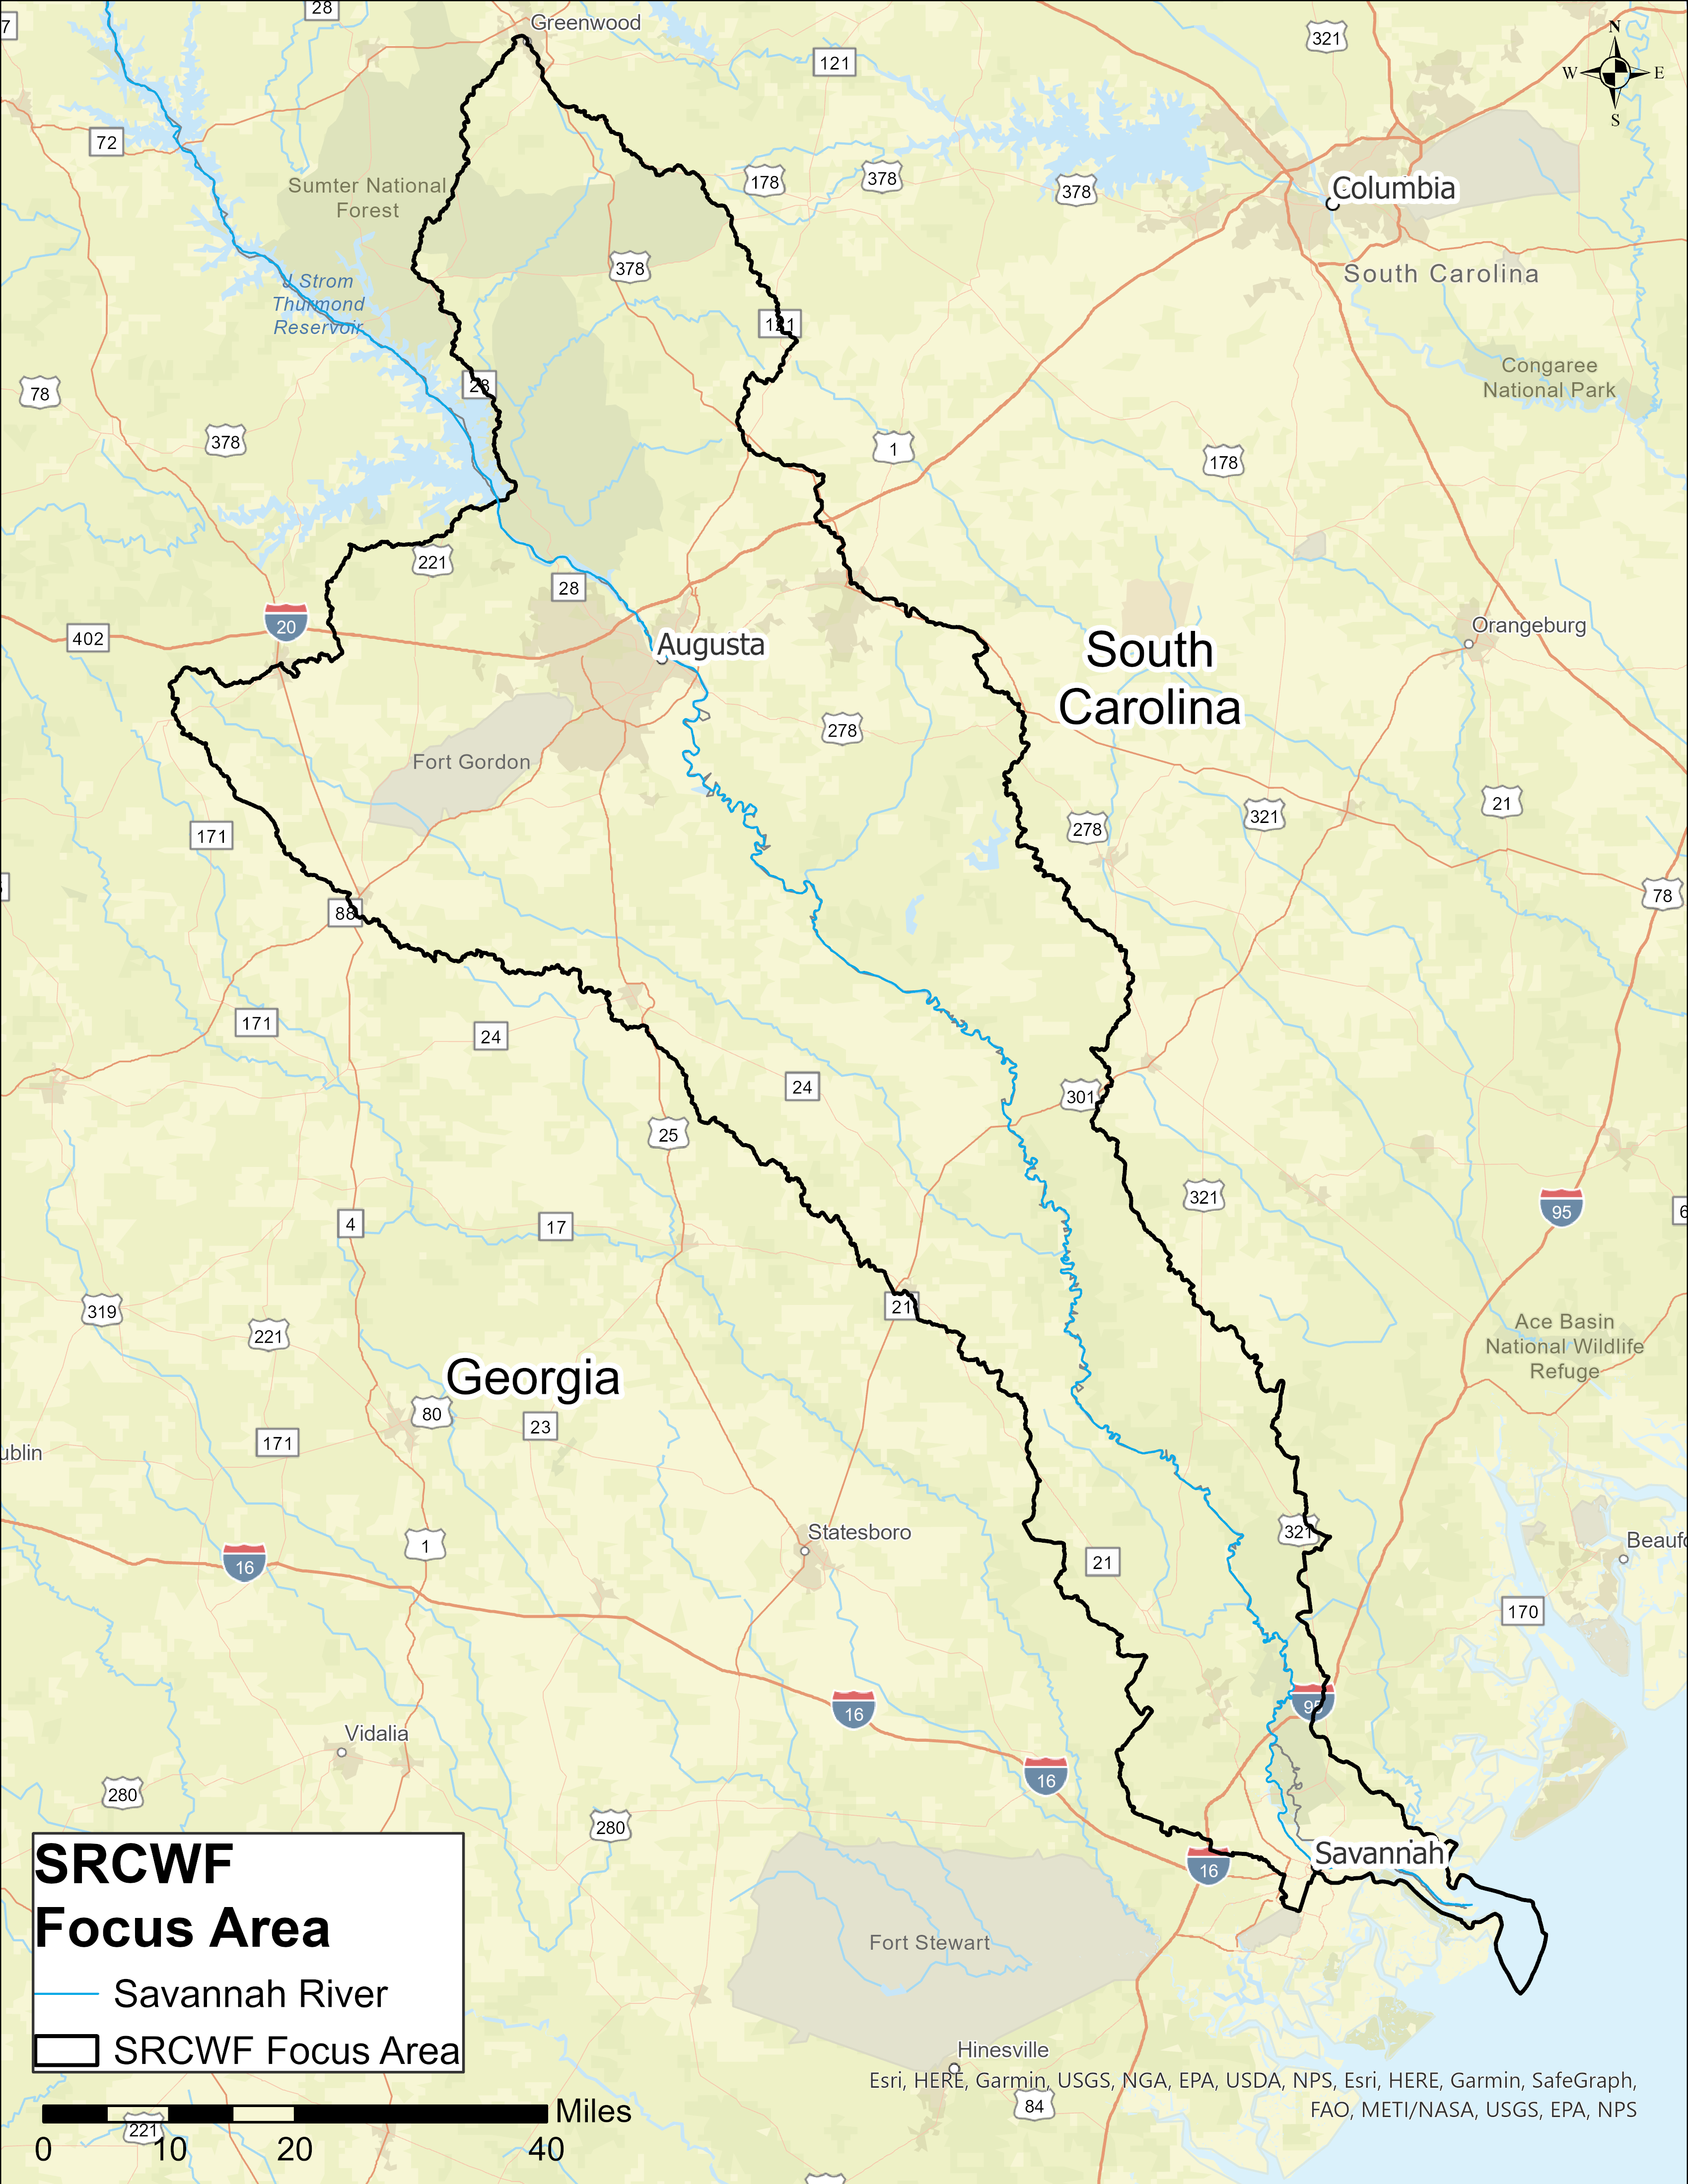 GAEPD and SCDHEC: Savannah River Basin Partnership